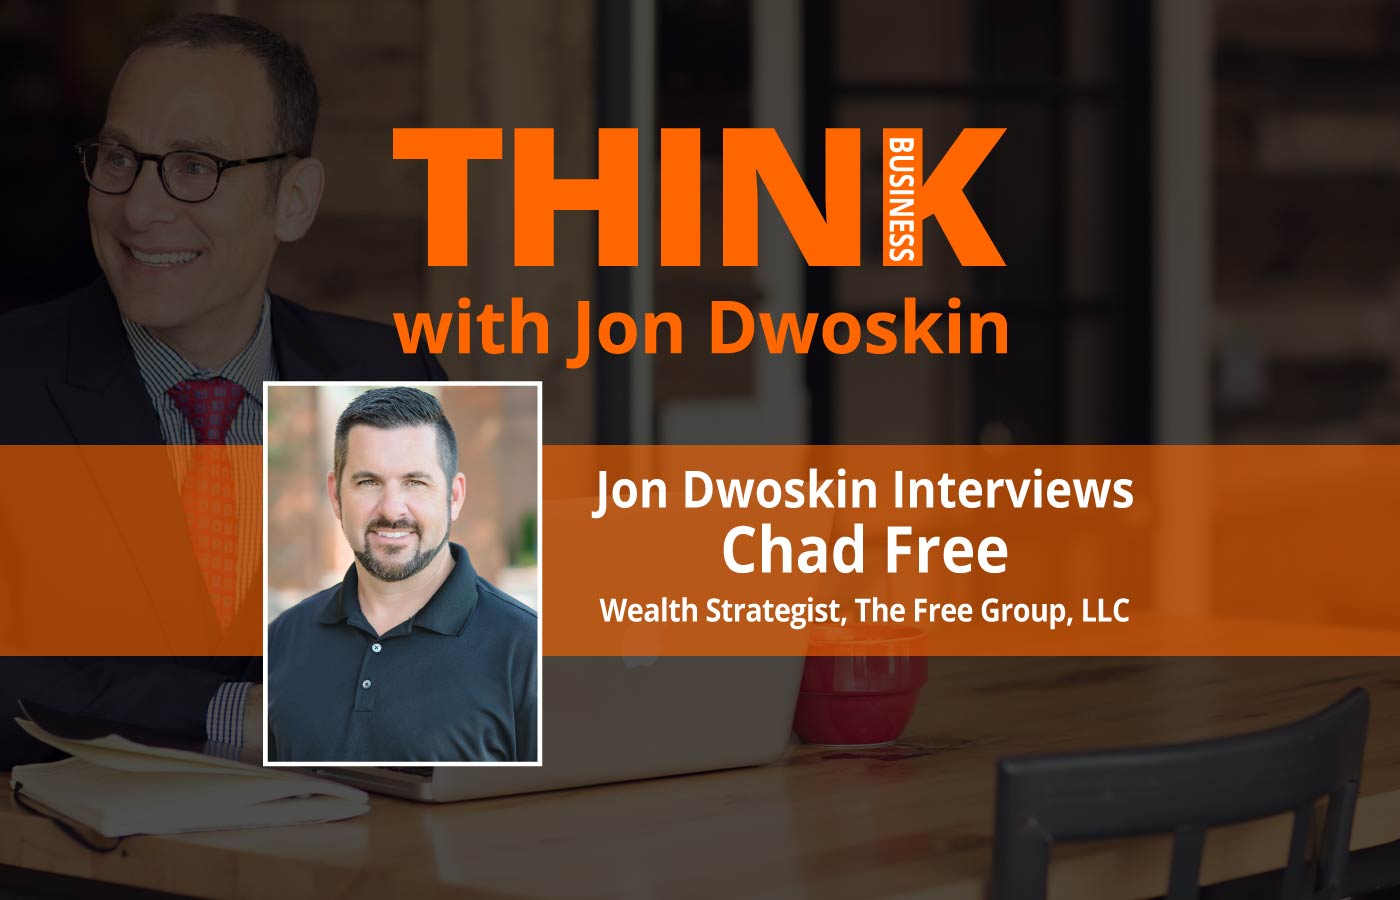 THINK Business Podcast: Jon Dwoskin Interviews Howard Behar